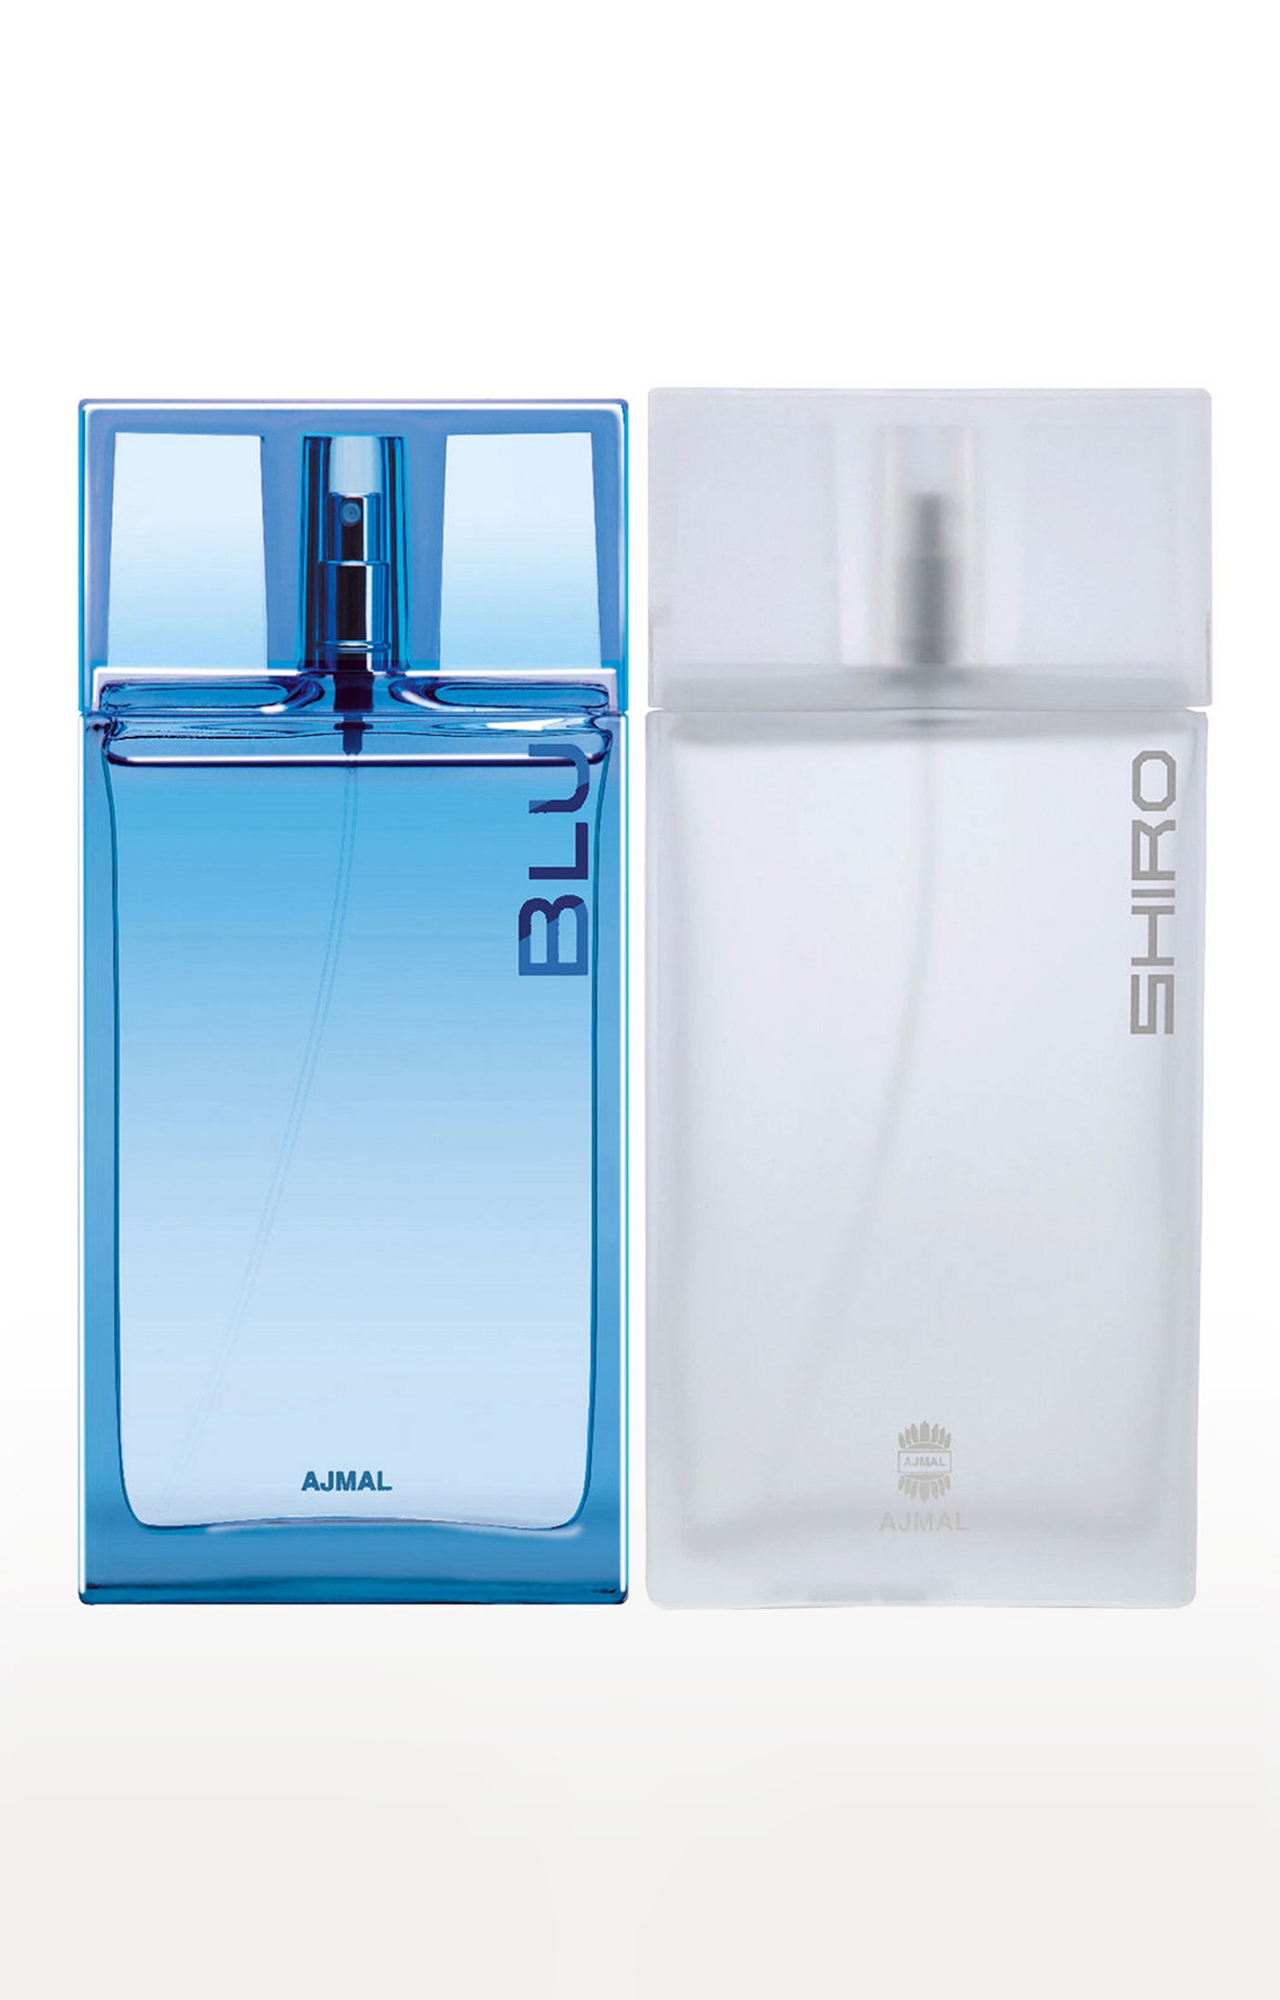 Ajmal Blu EDP Aquatic Perfume 90ml for Men and Shiro EDP Perfume 90ml for Men